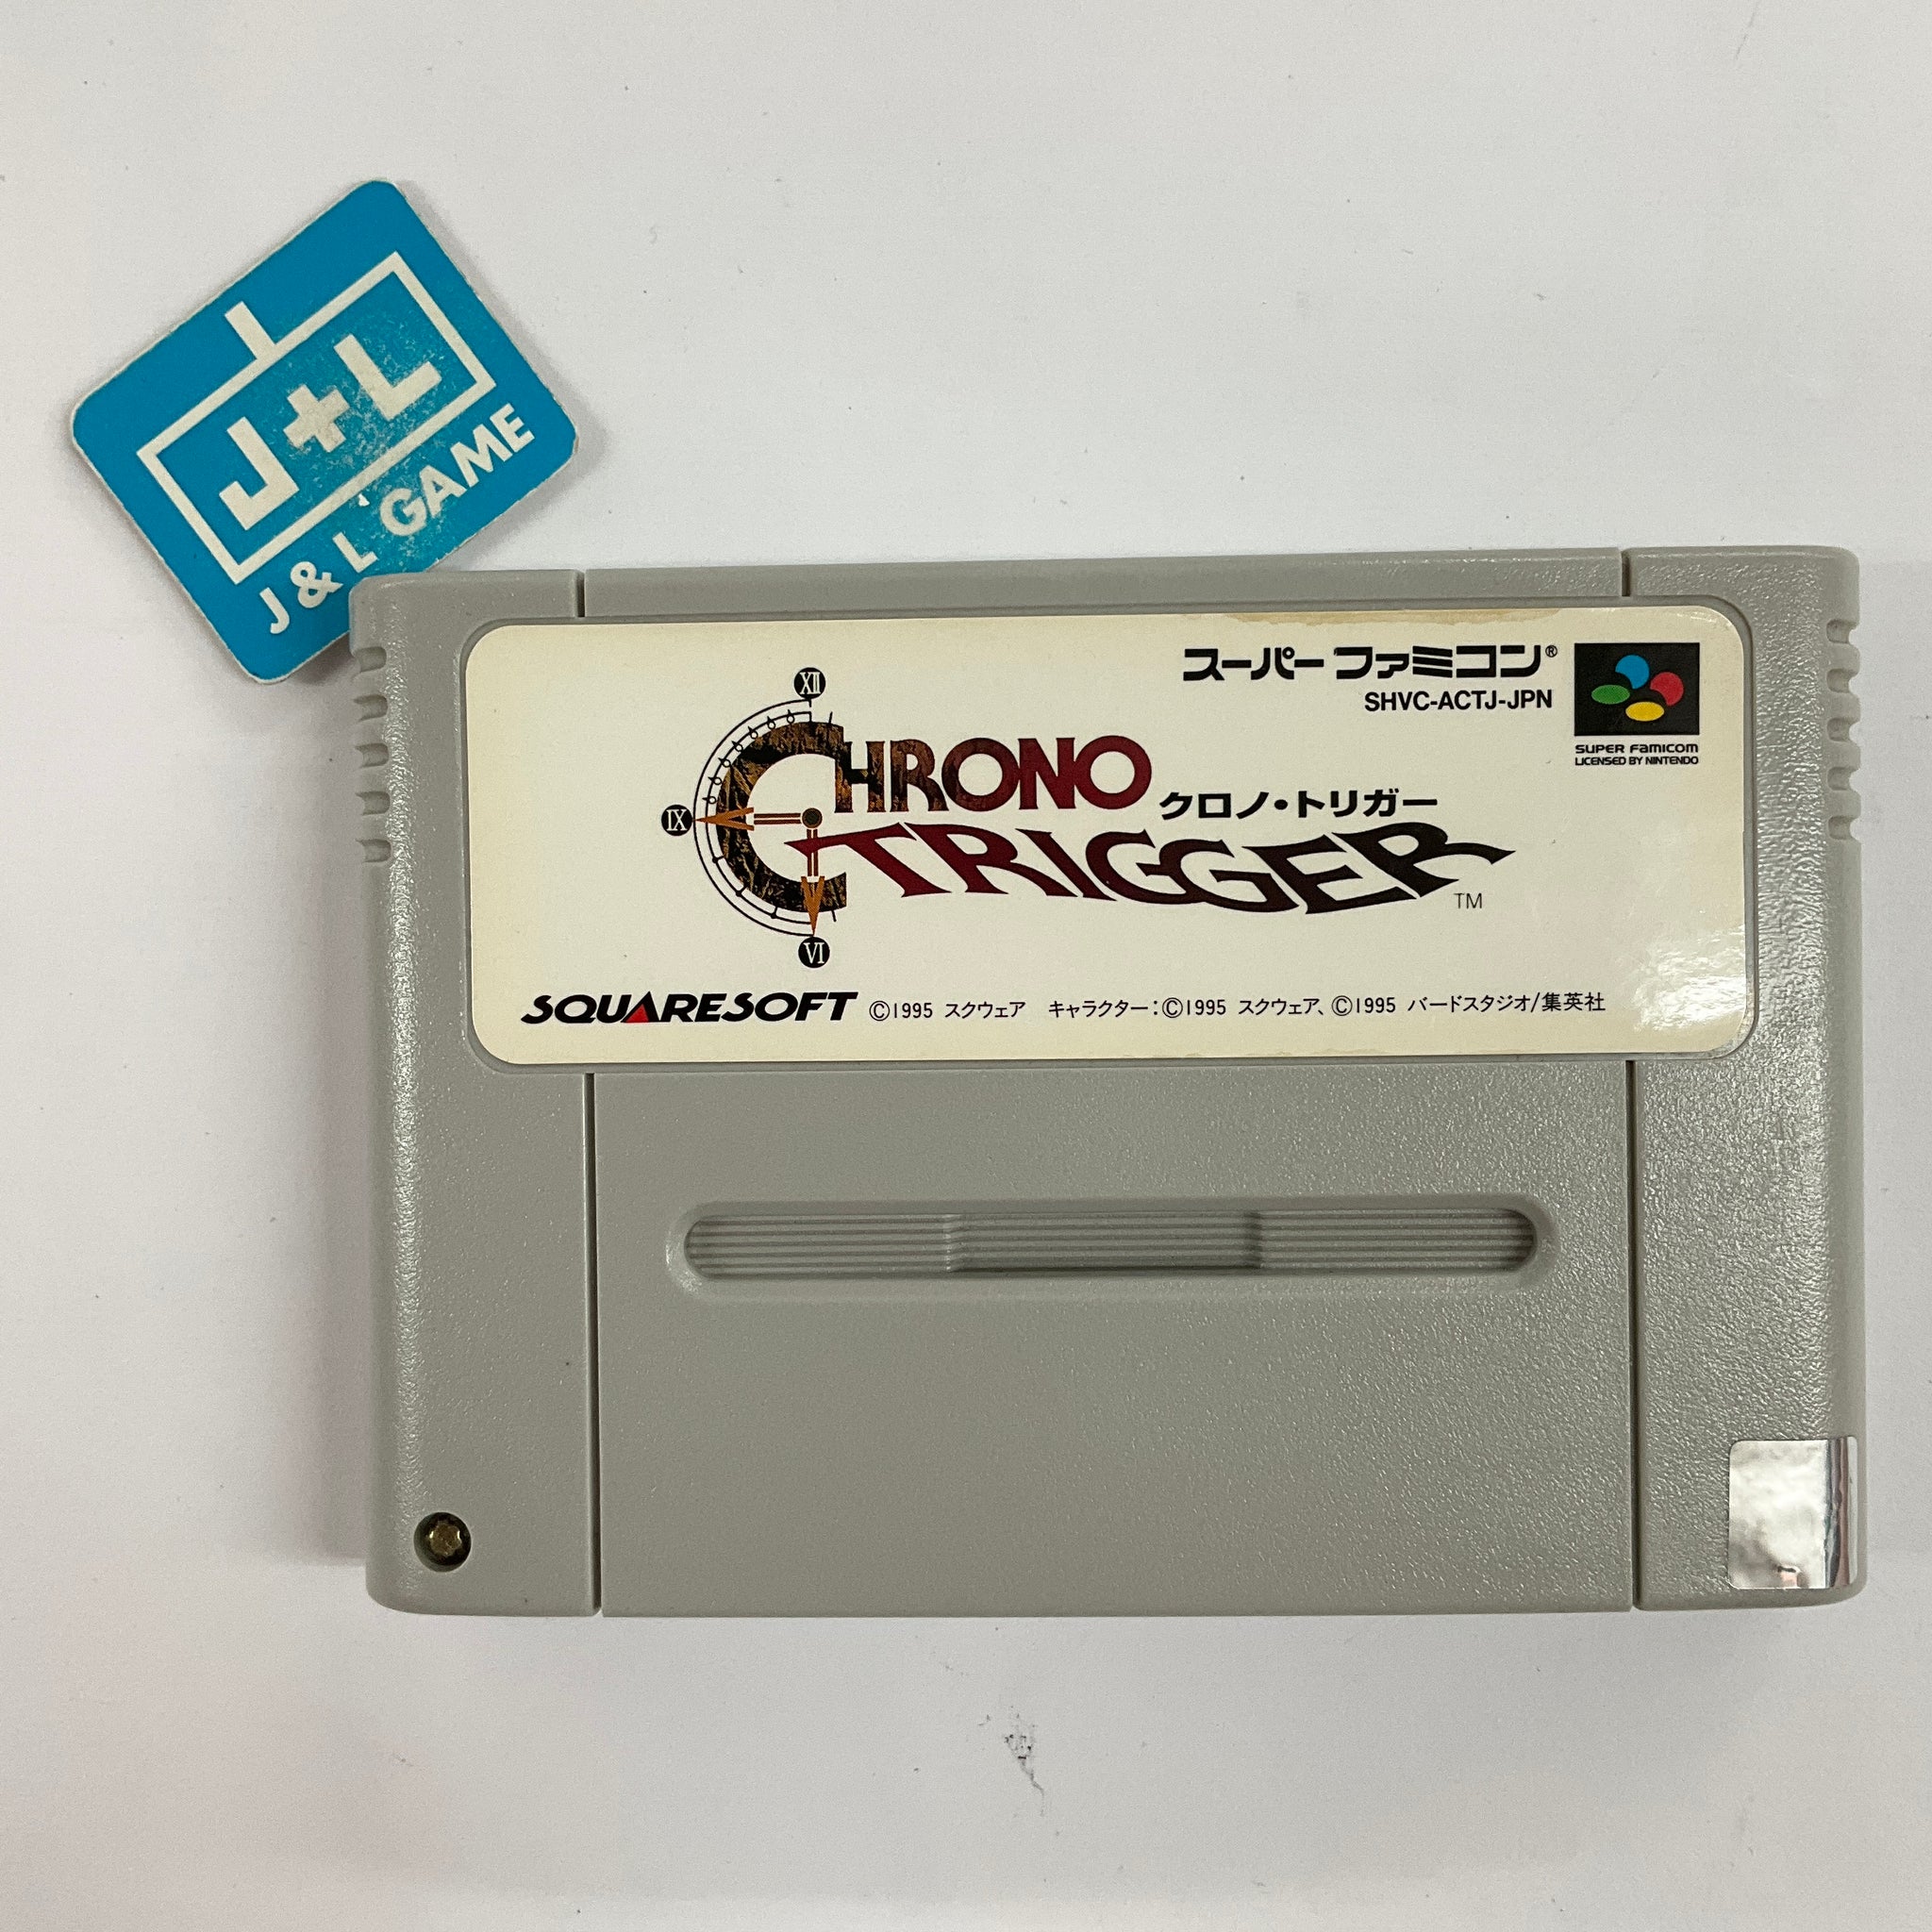  Chrono Trigger : Video Games